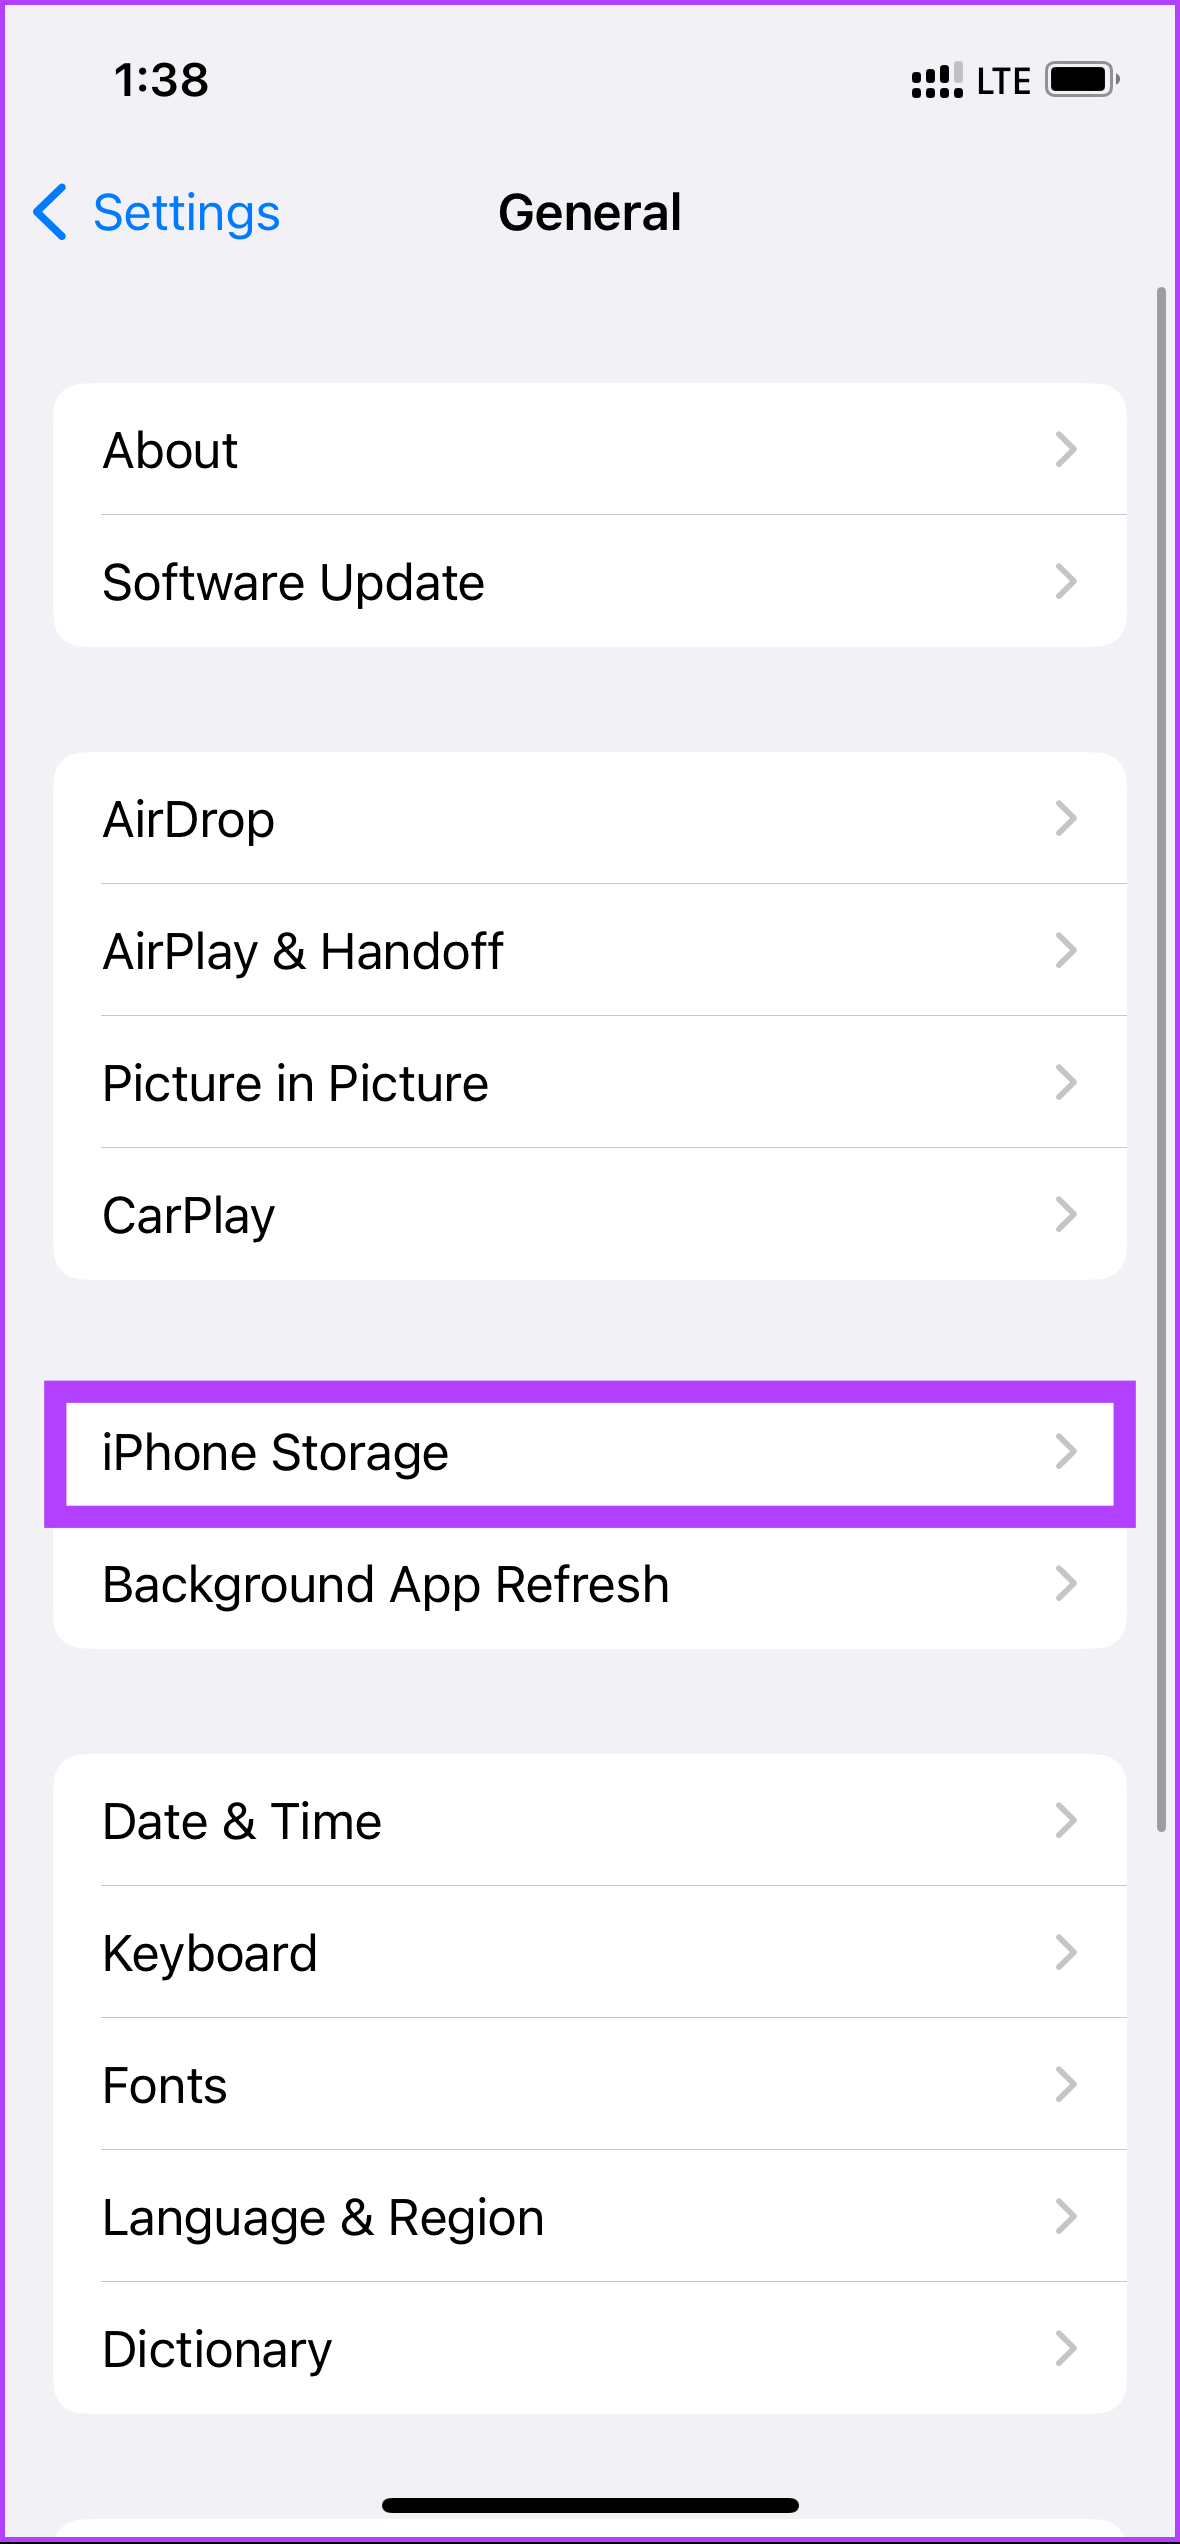 click on iPhone Storage